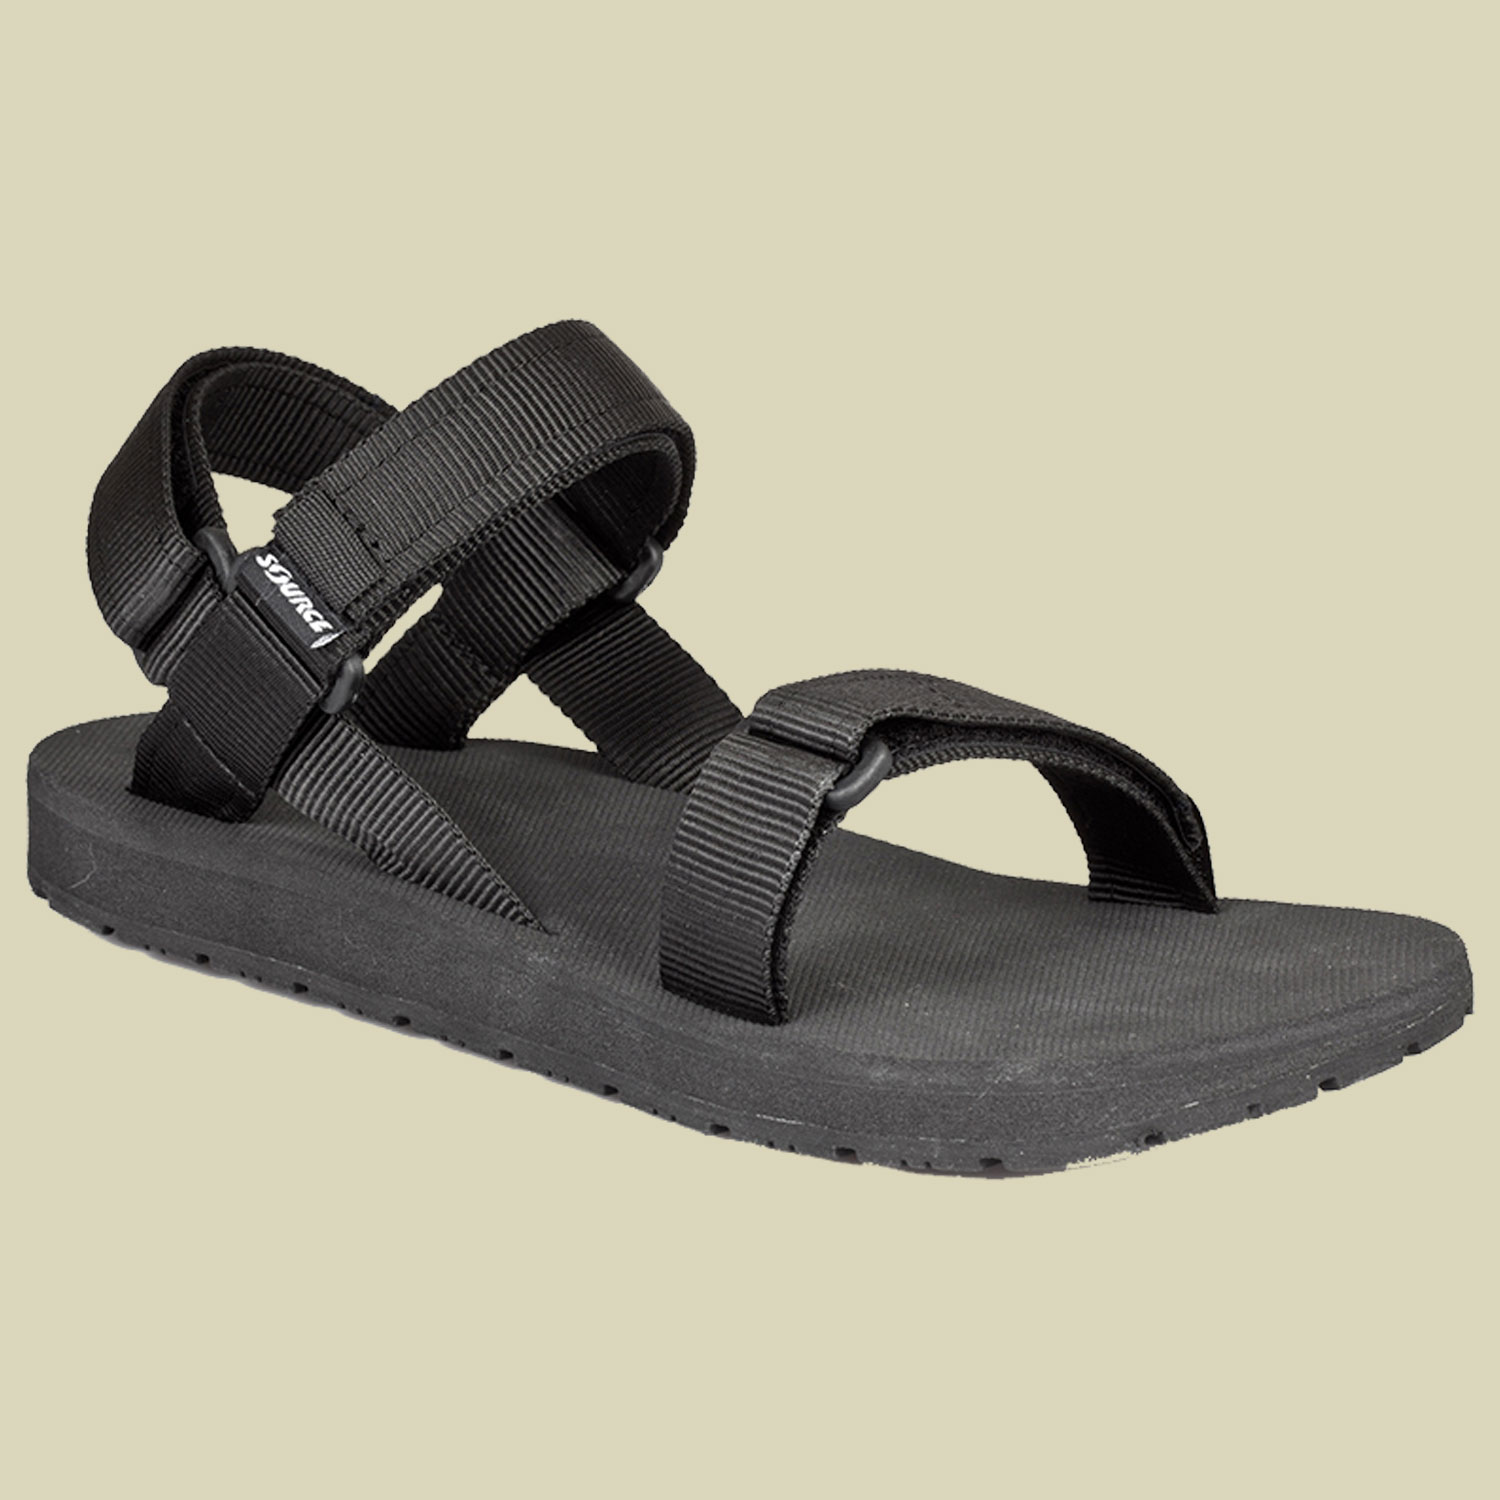 Classic Sandale Men Größe 43 Farbe black